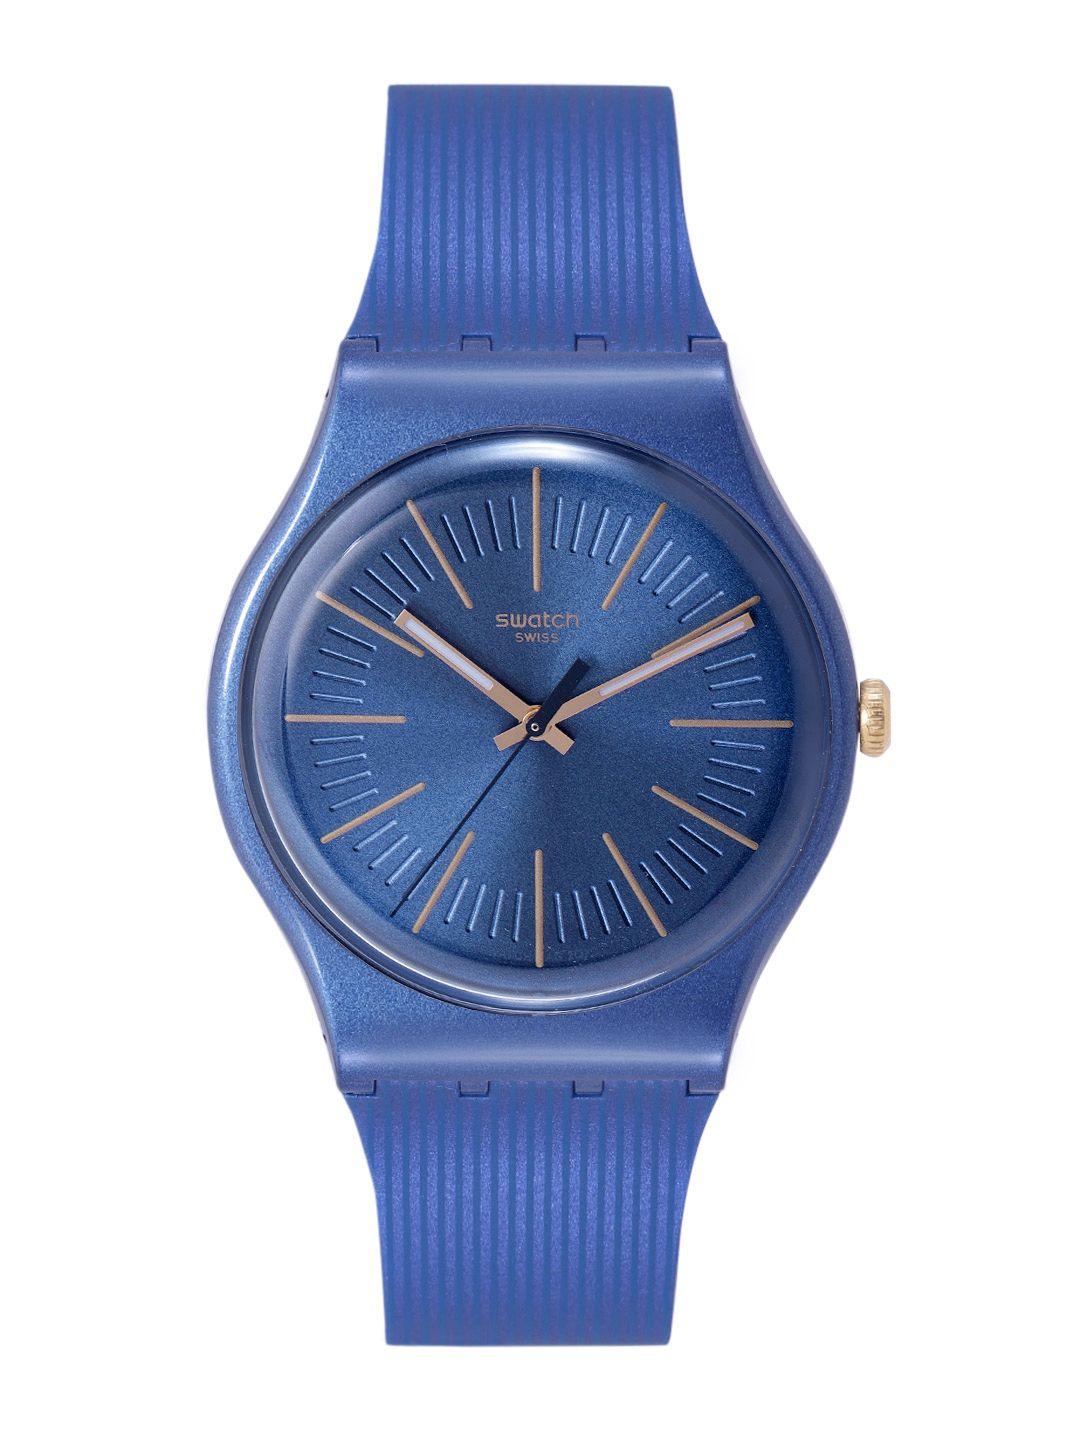 swatch unisex navy blue swiss made analogue watch suon143